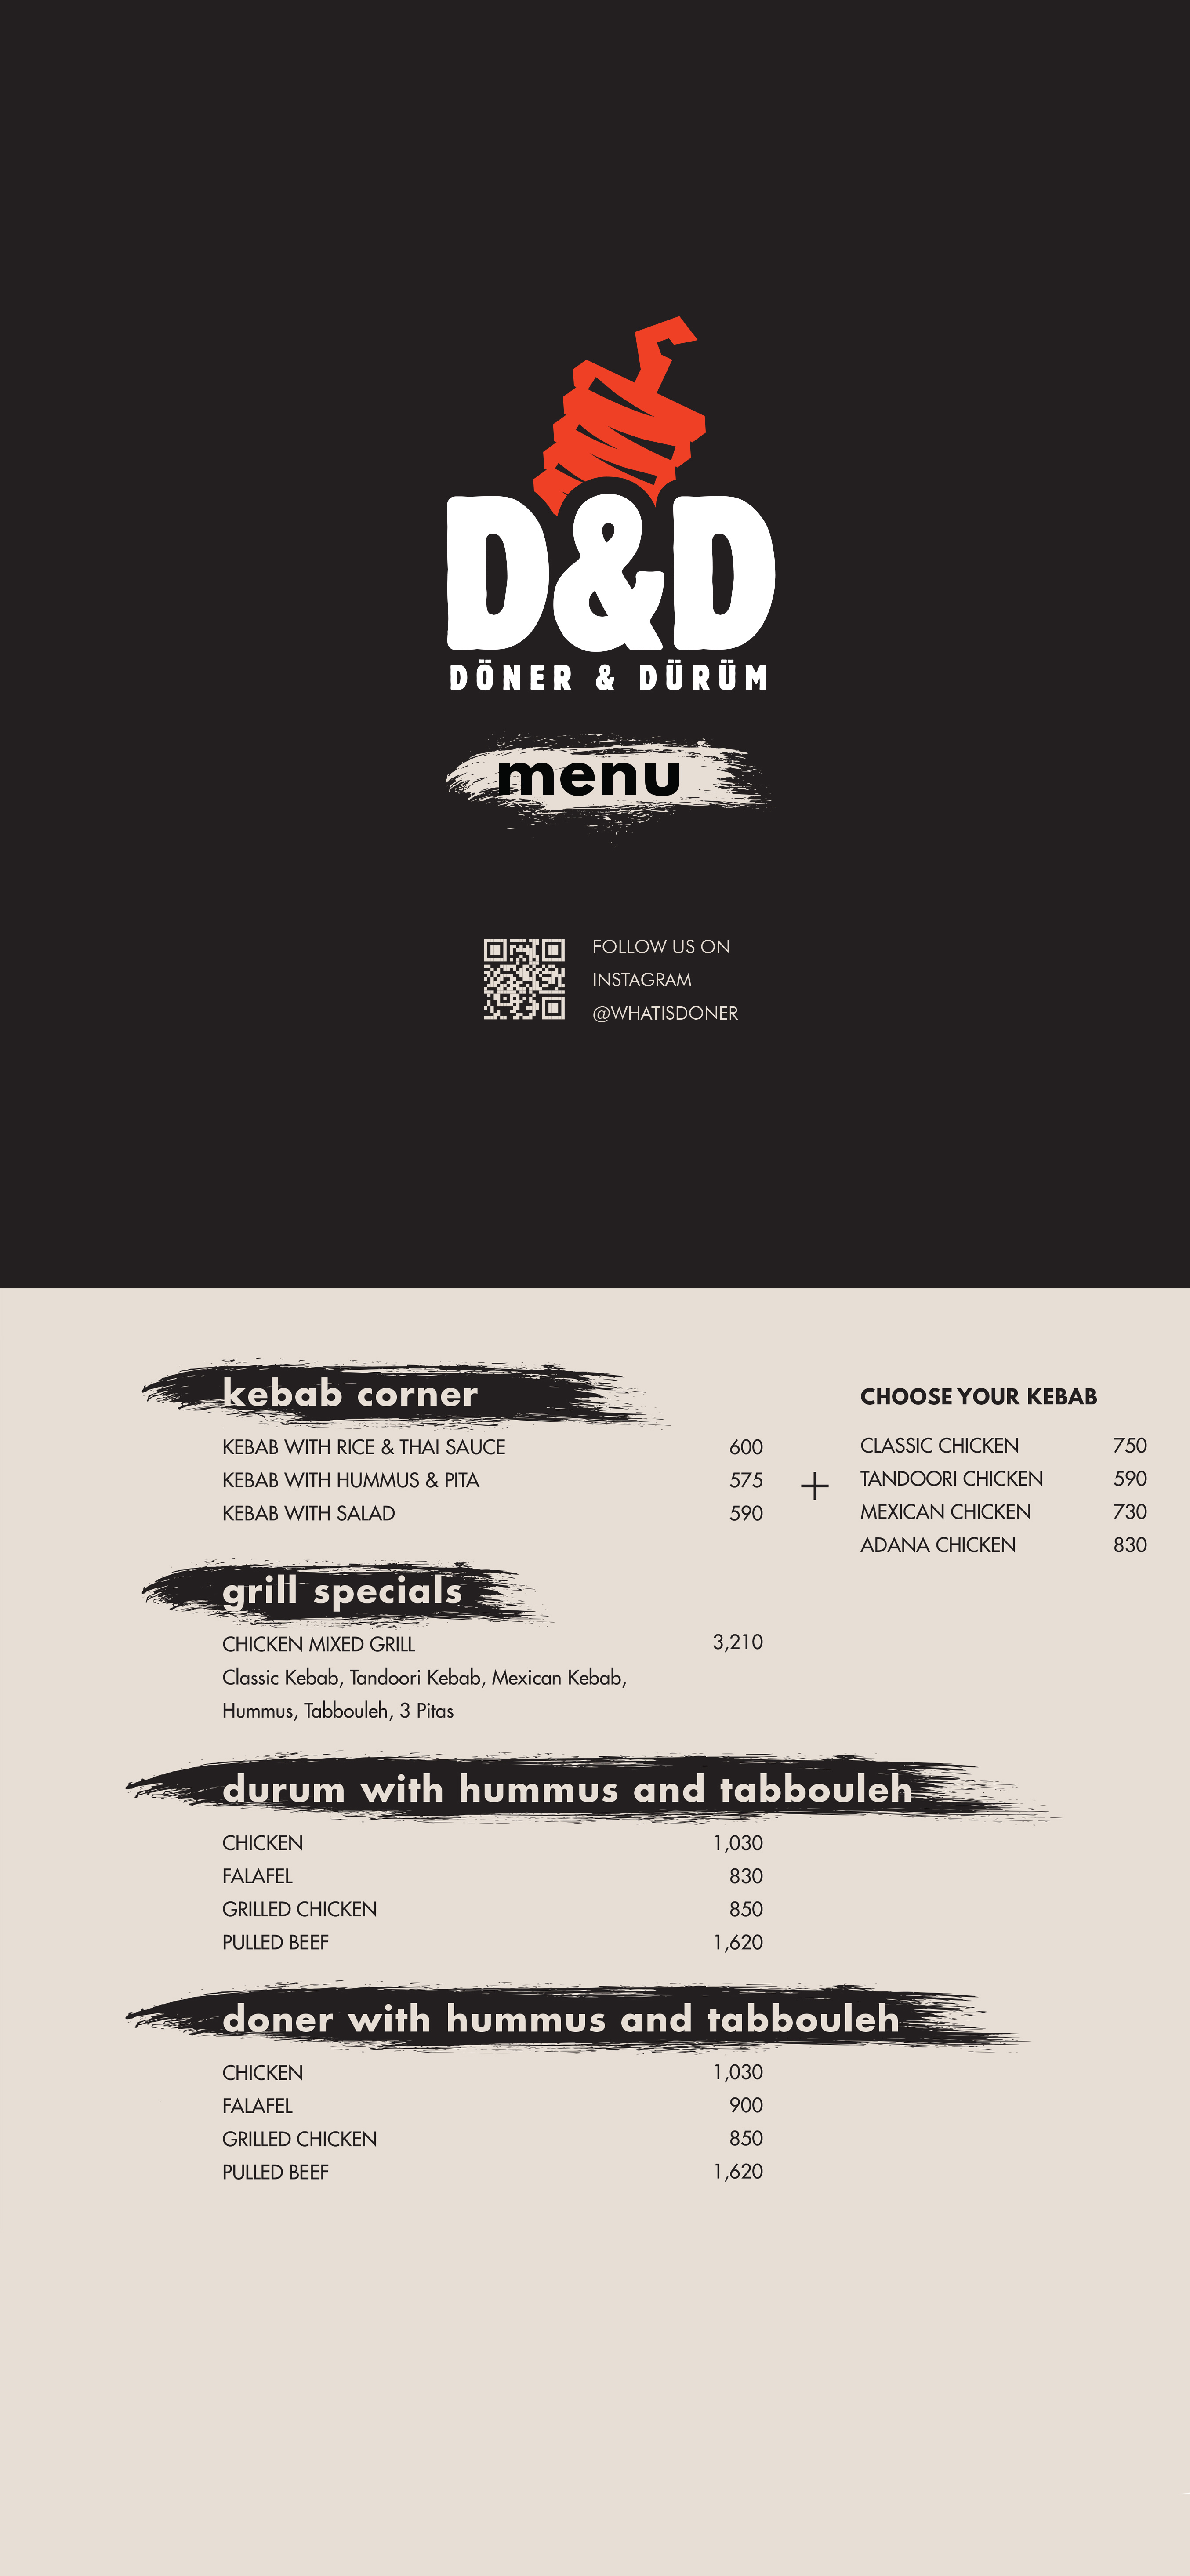 Doner & Durum menu